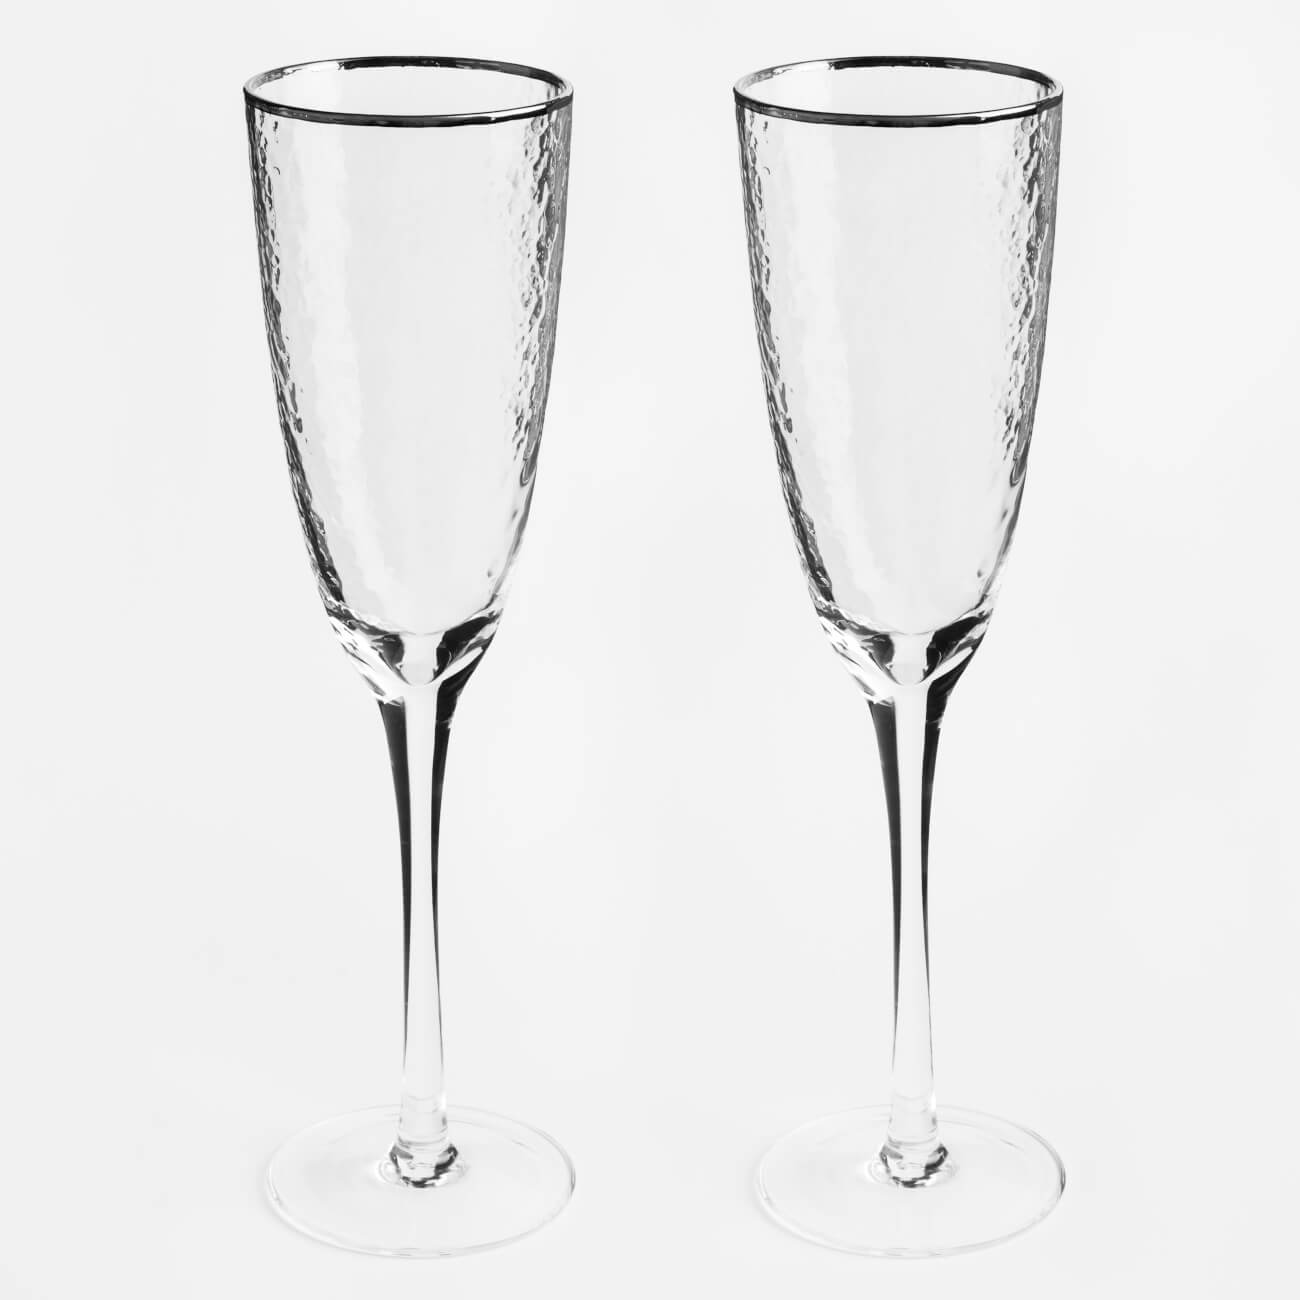 Бокал для шампанского, 275 мл, 2 шт, стекло, с серебристым кантом, Ripply silver бокал для мартини 250 мл 2 шт стекло перламутр ripply polar